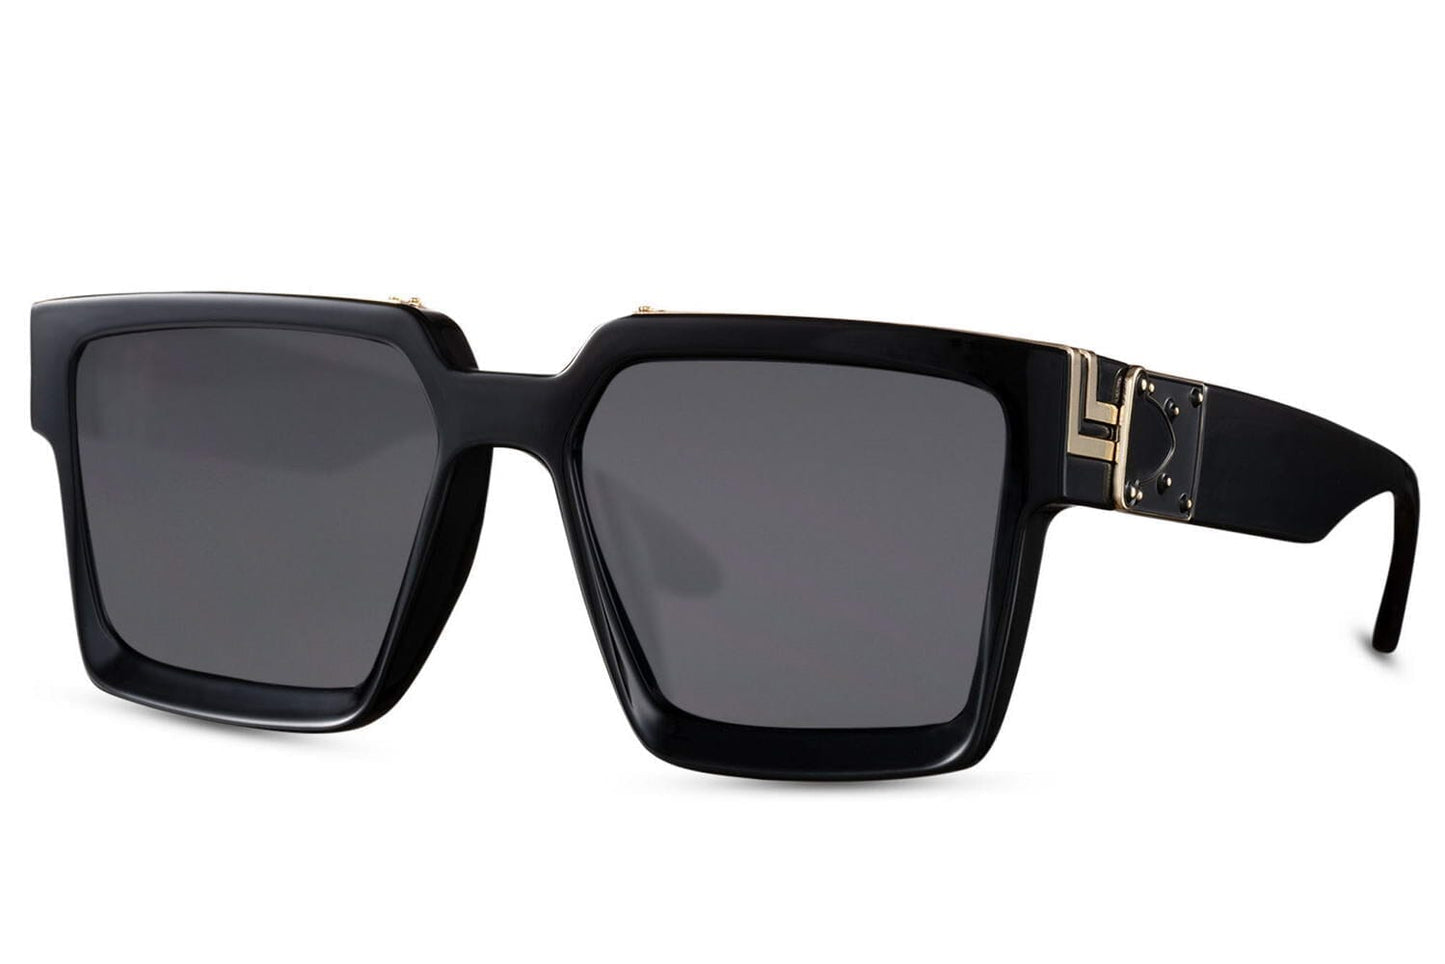 Black oversize sunglasses. Gold embellish detail on the sides.